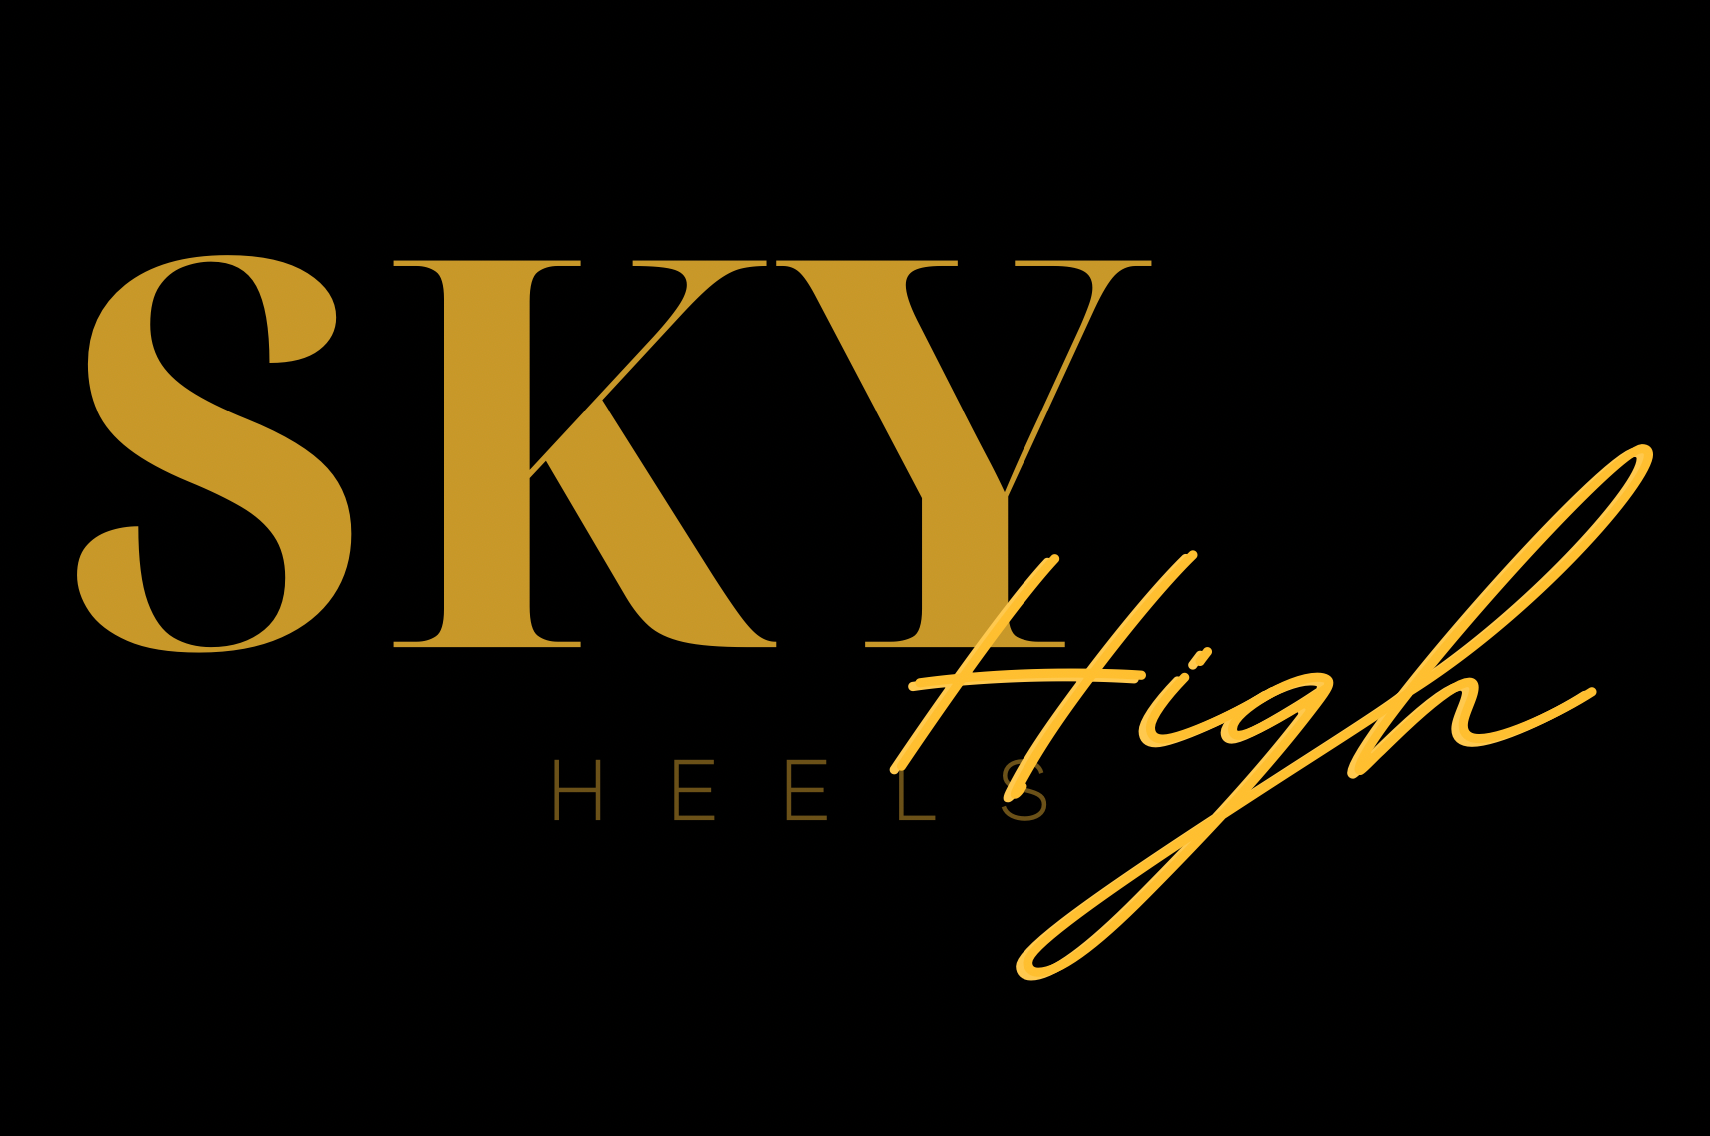 Sky High Heels Australia